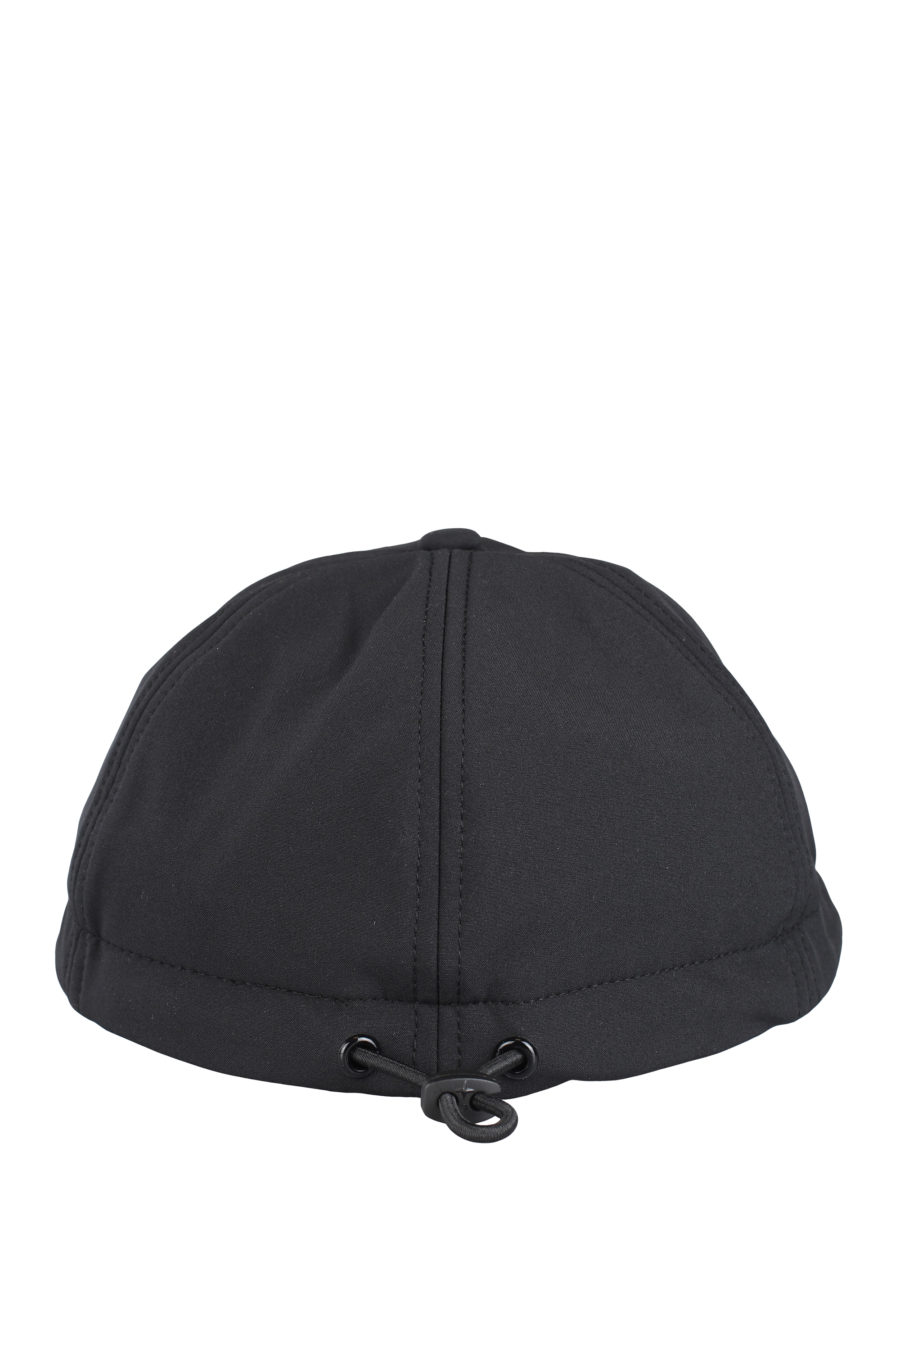 Gorra negra con logotipo bordado blanco - IMG 9734